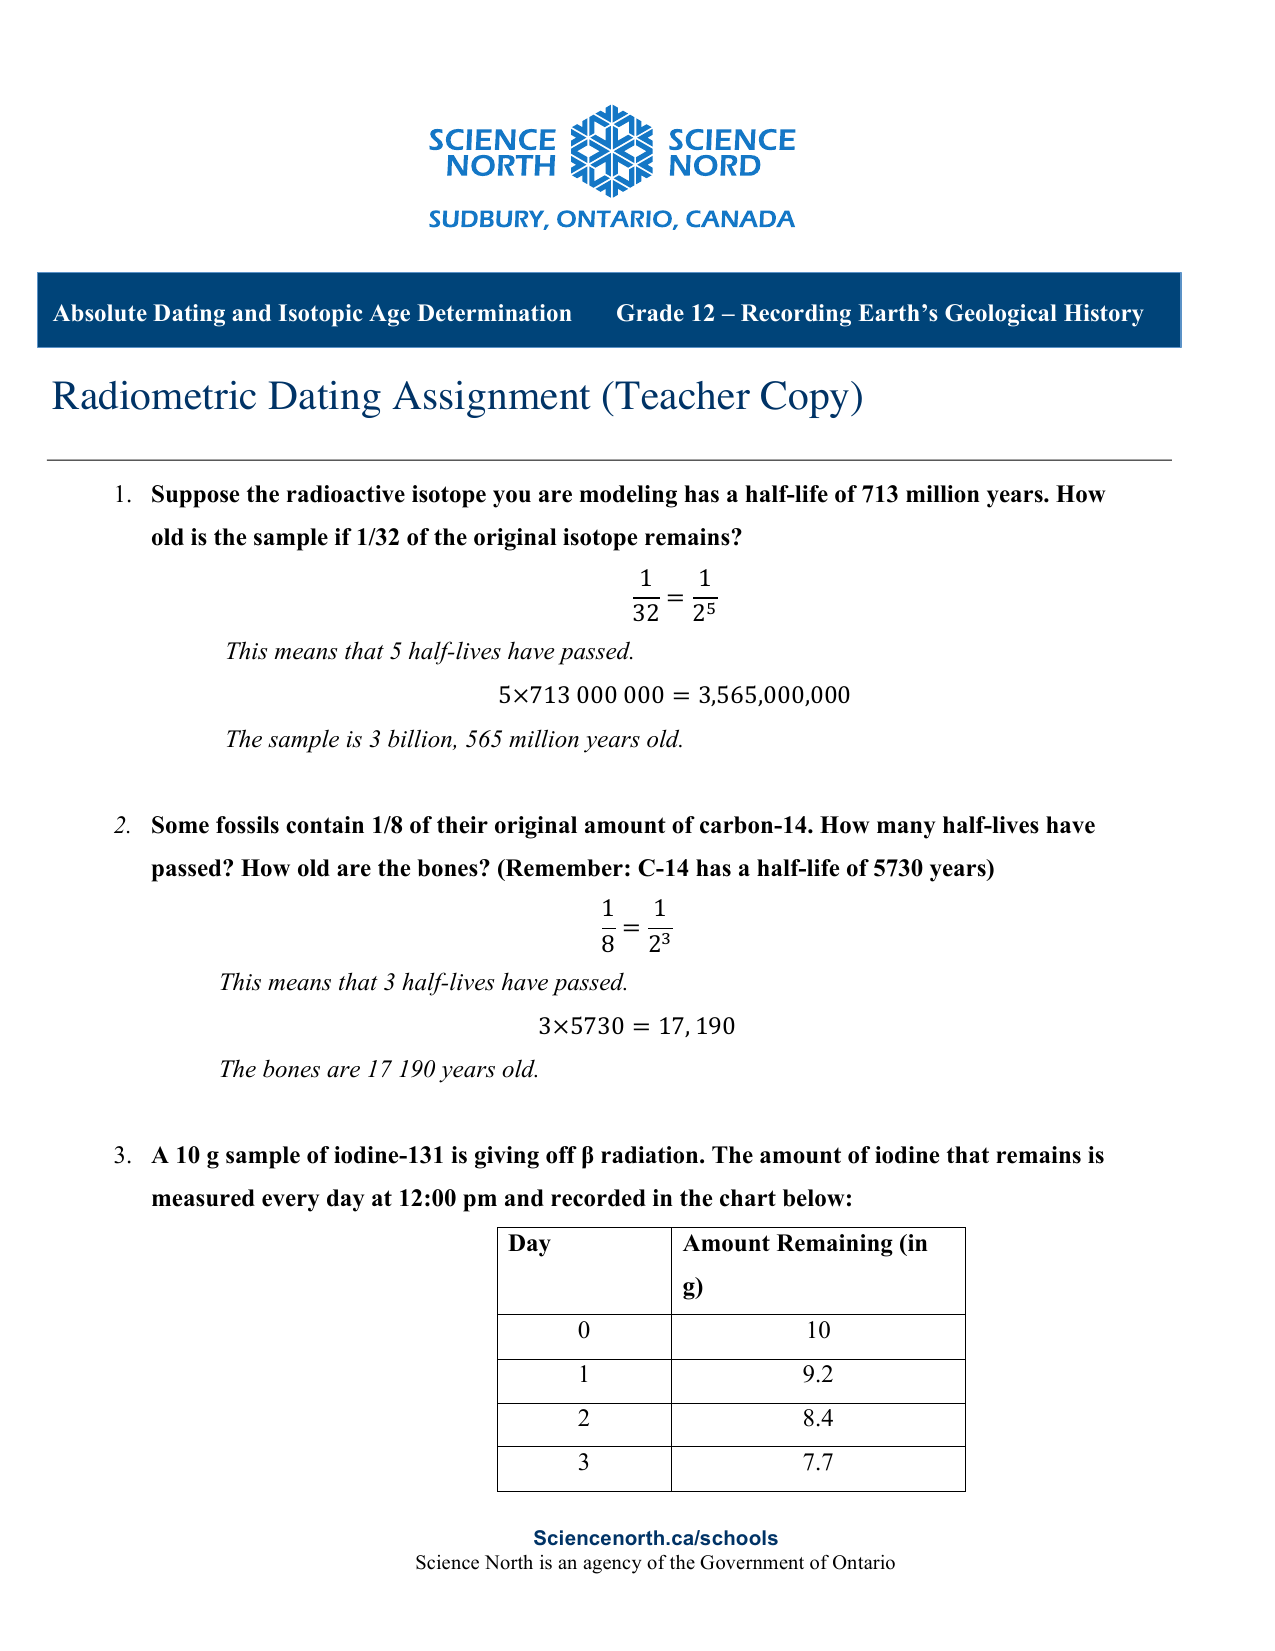 Radiometric Dating Assignment (Teacher Copy)